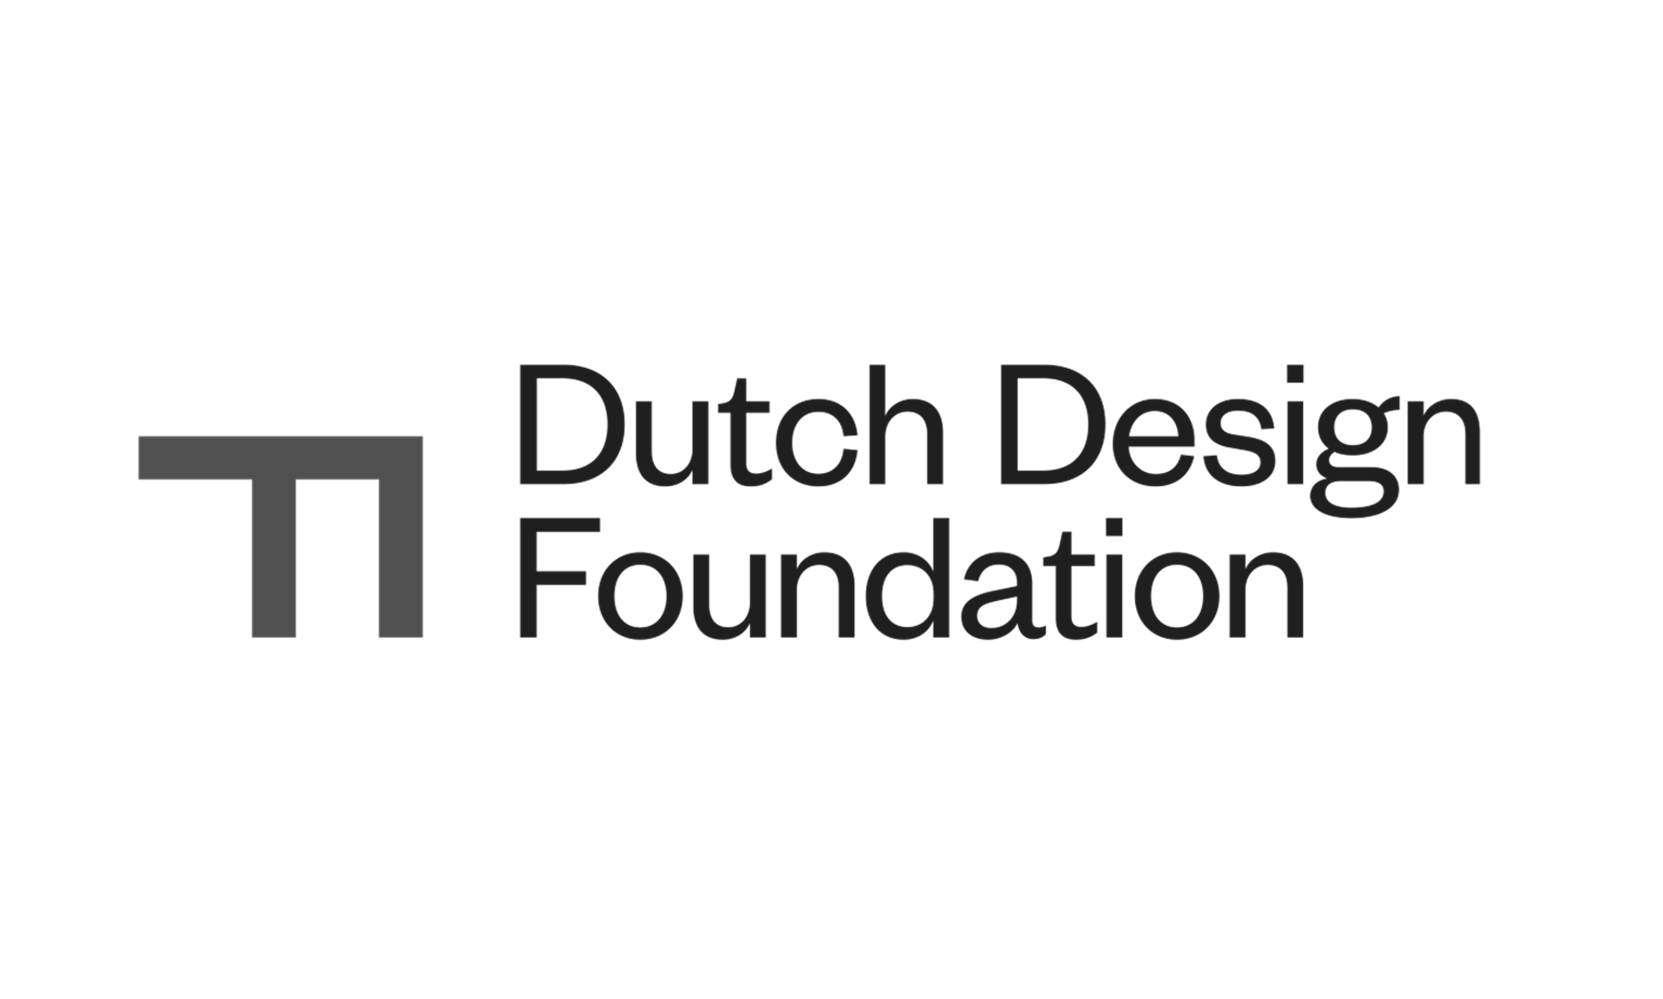 Dutch Design Foundation